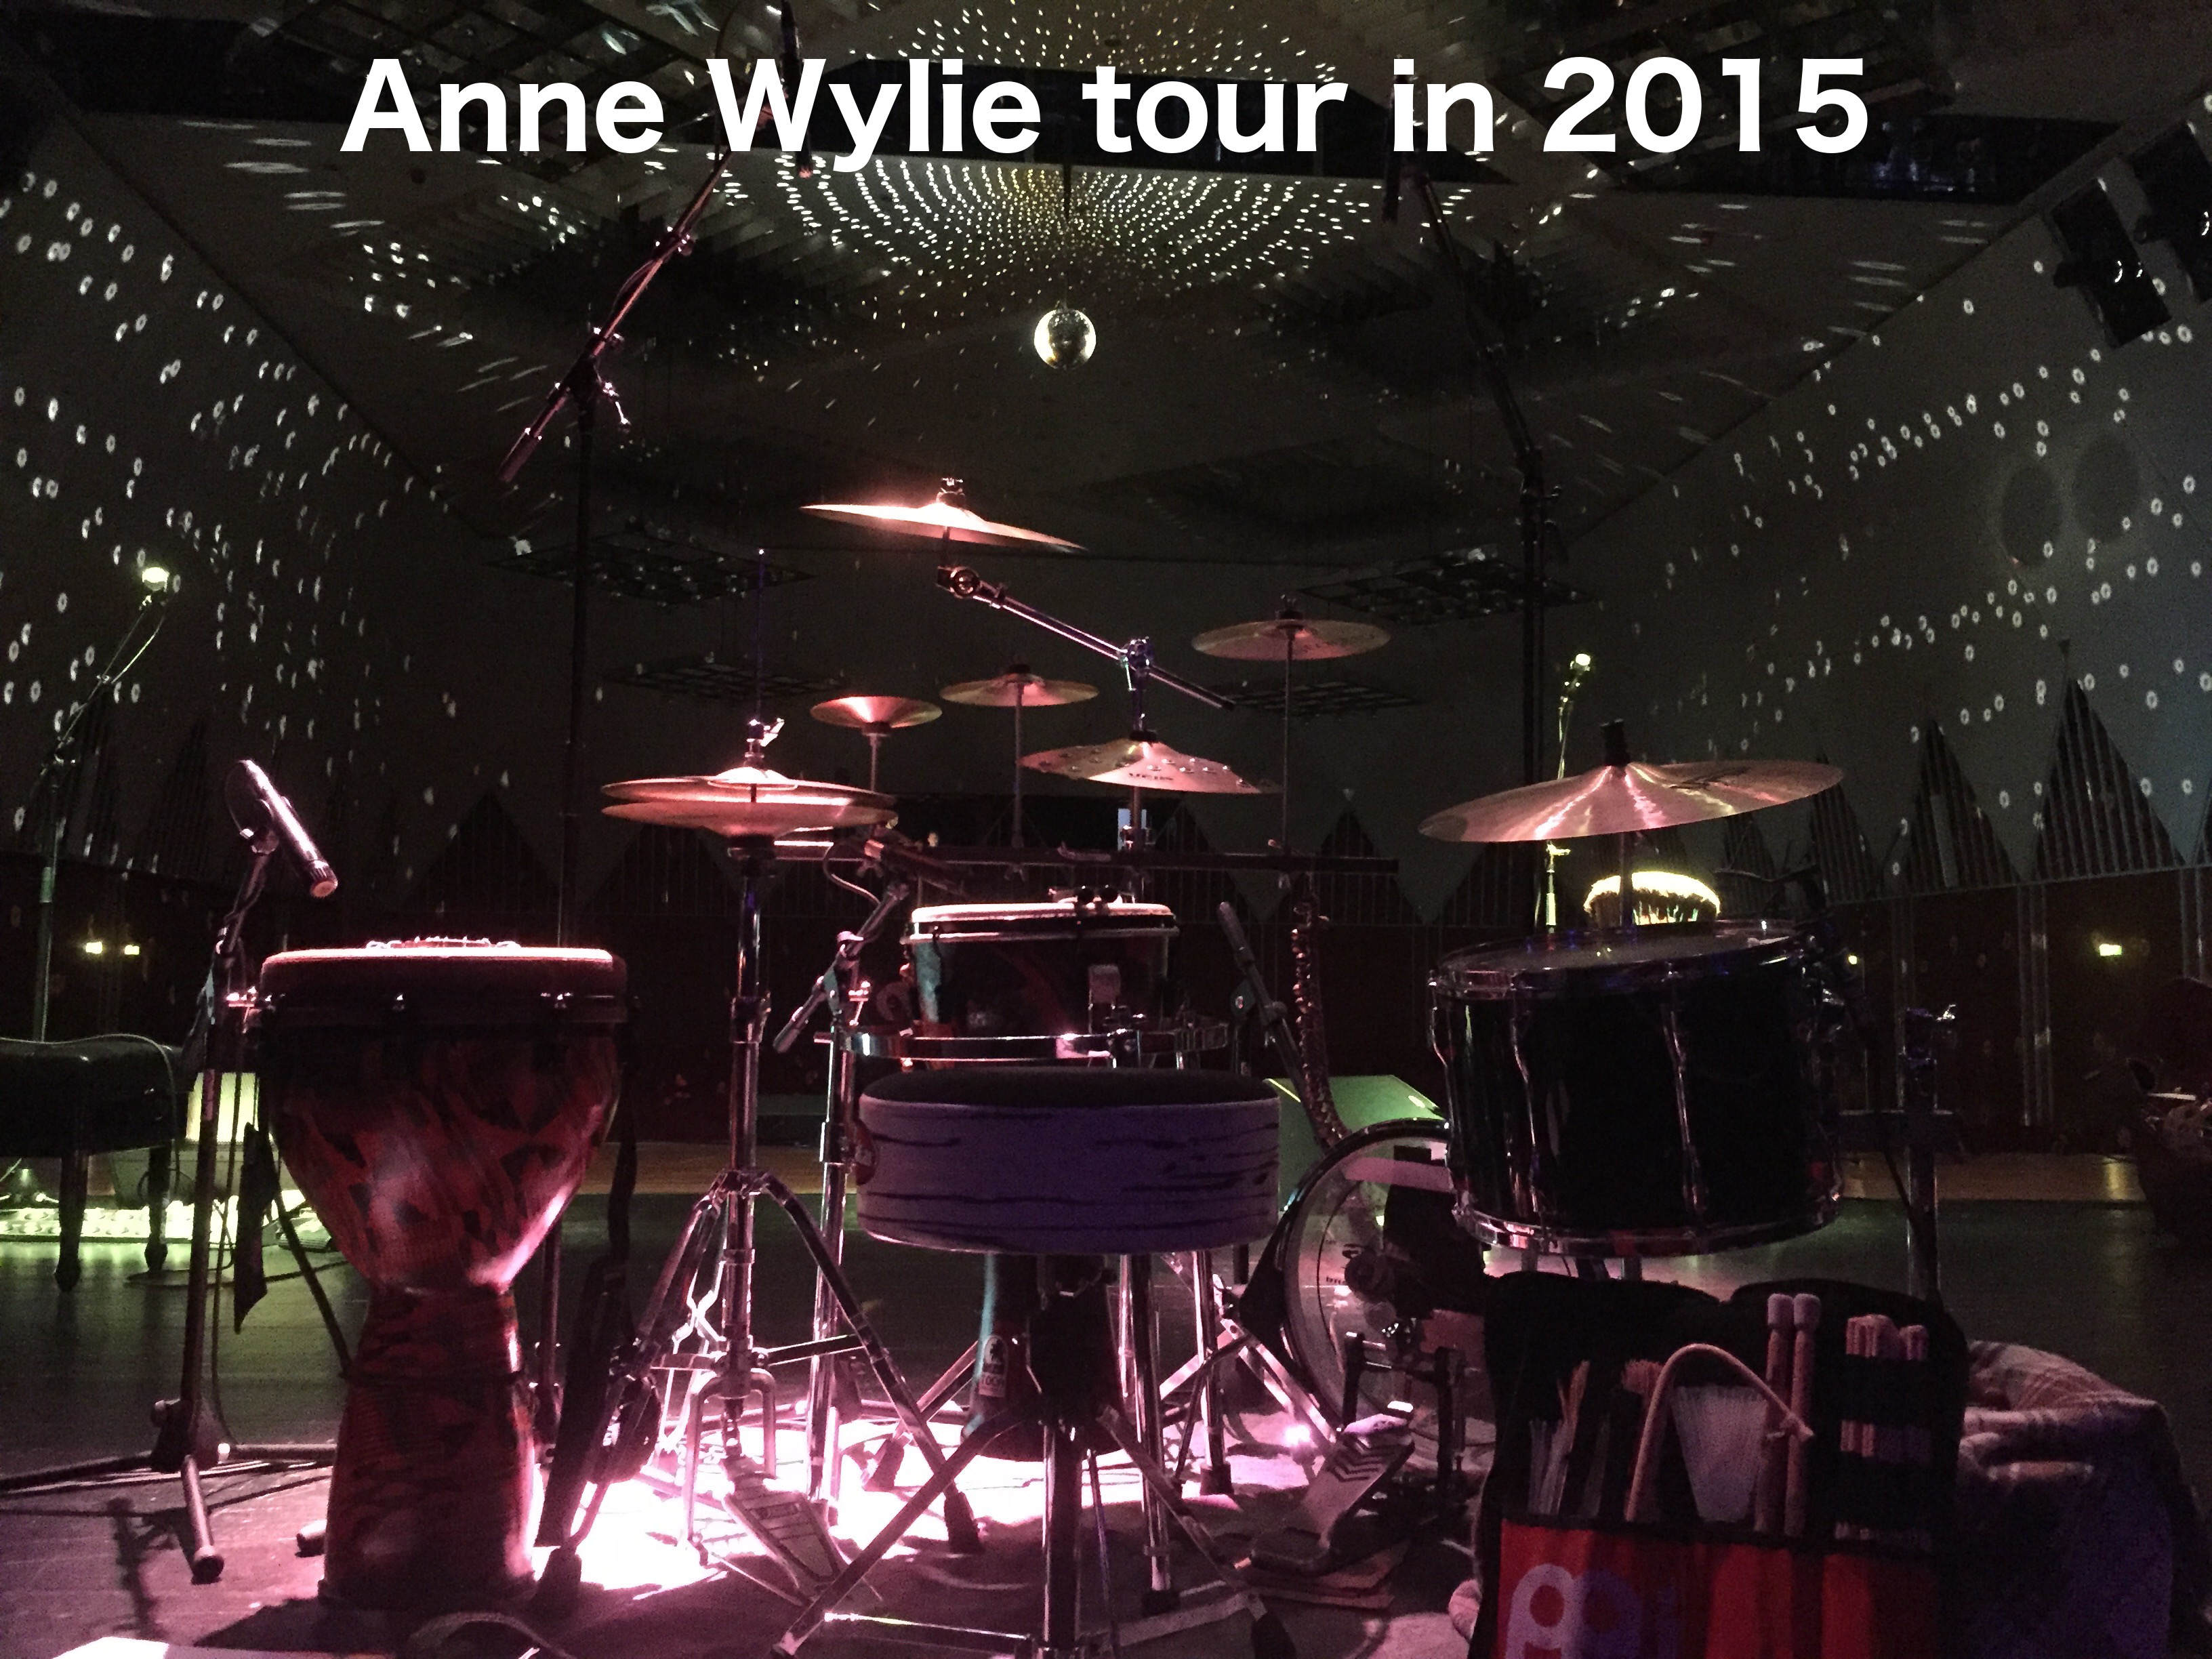 Anne Wylie Tour 2015